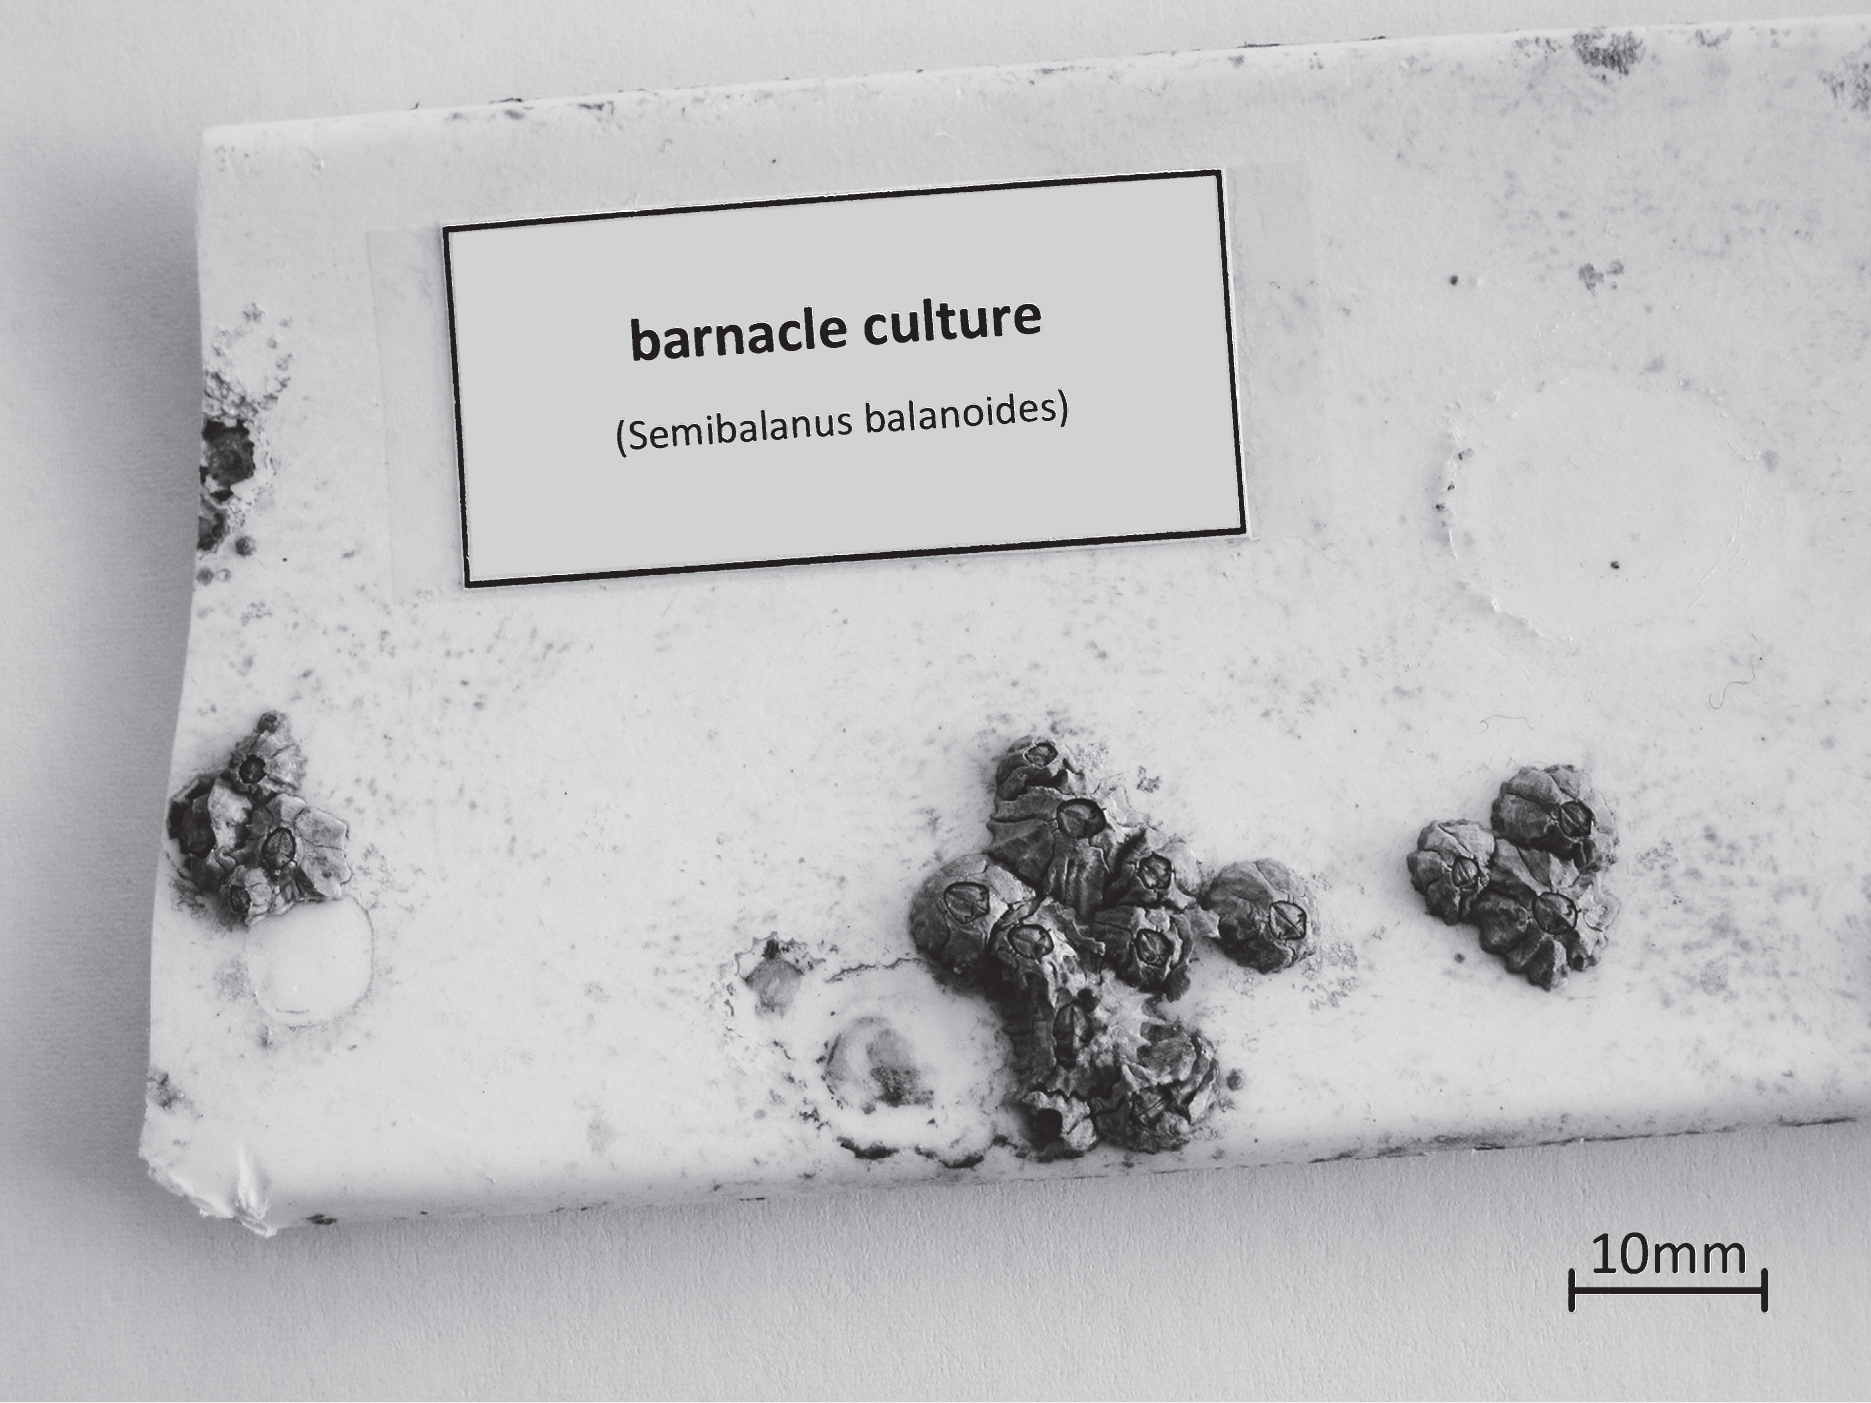 The modular growth structure of barnacle cultures (applies to Semibalanus balanoides).